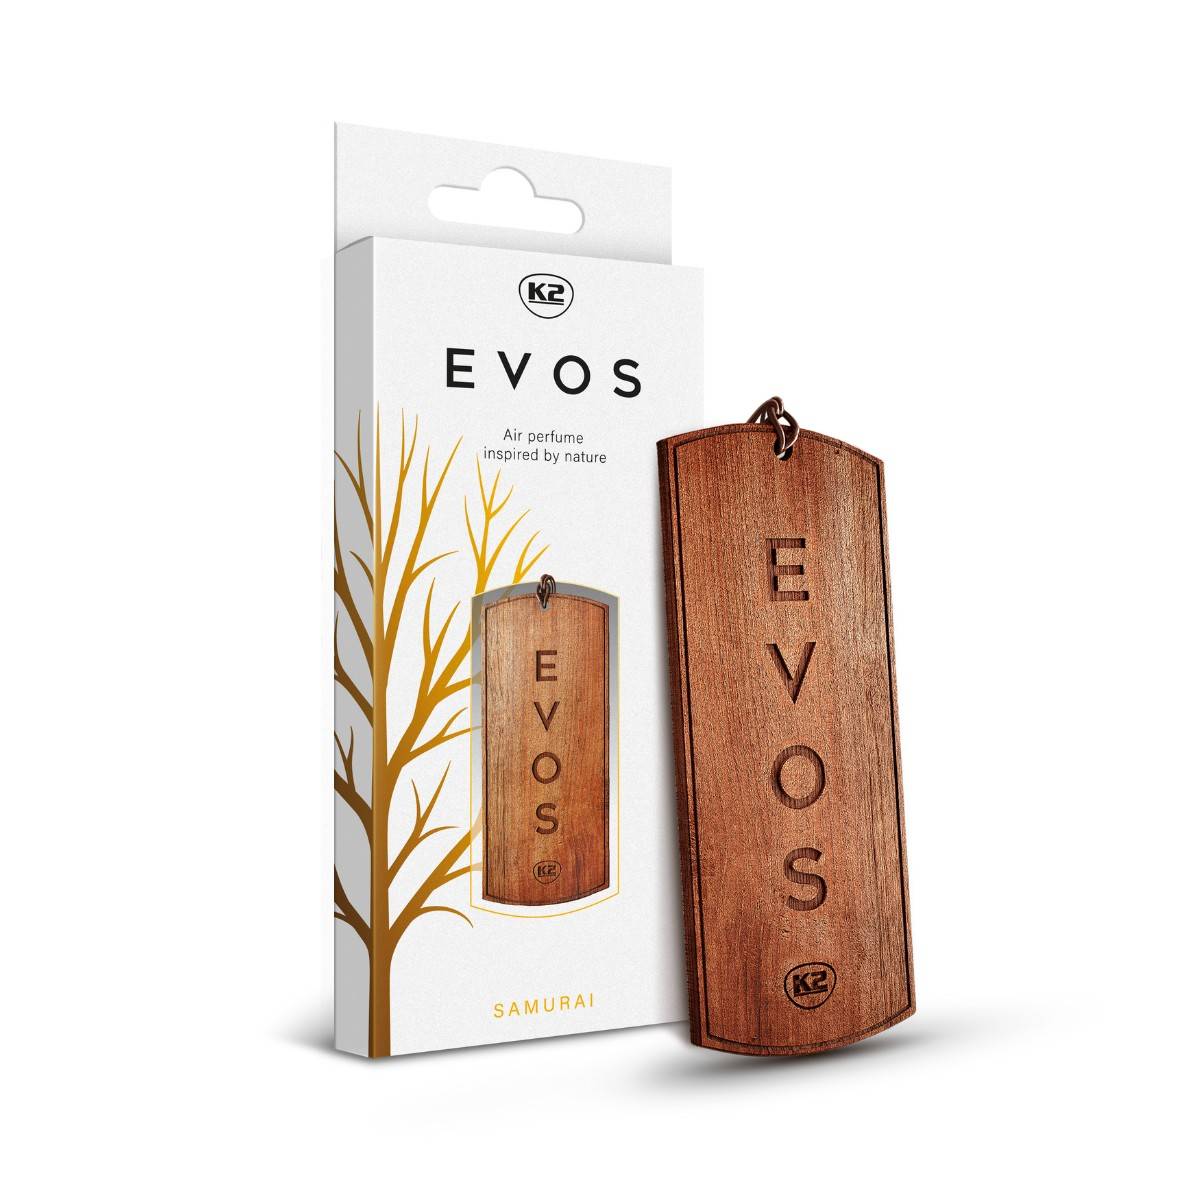 Evos wooden car air freshener - Samurai thumb